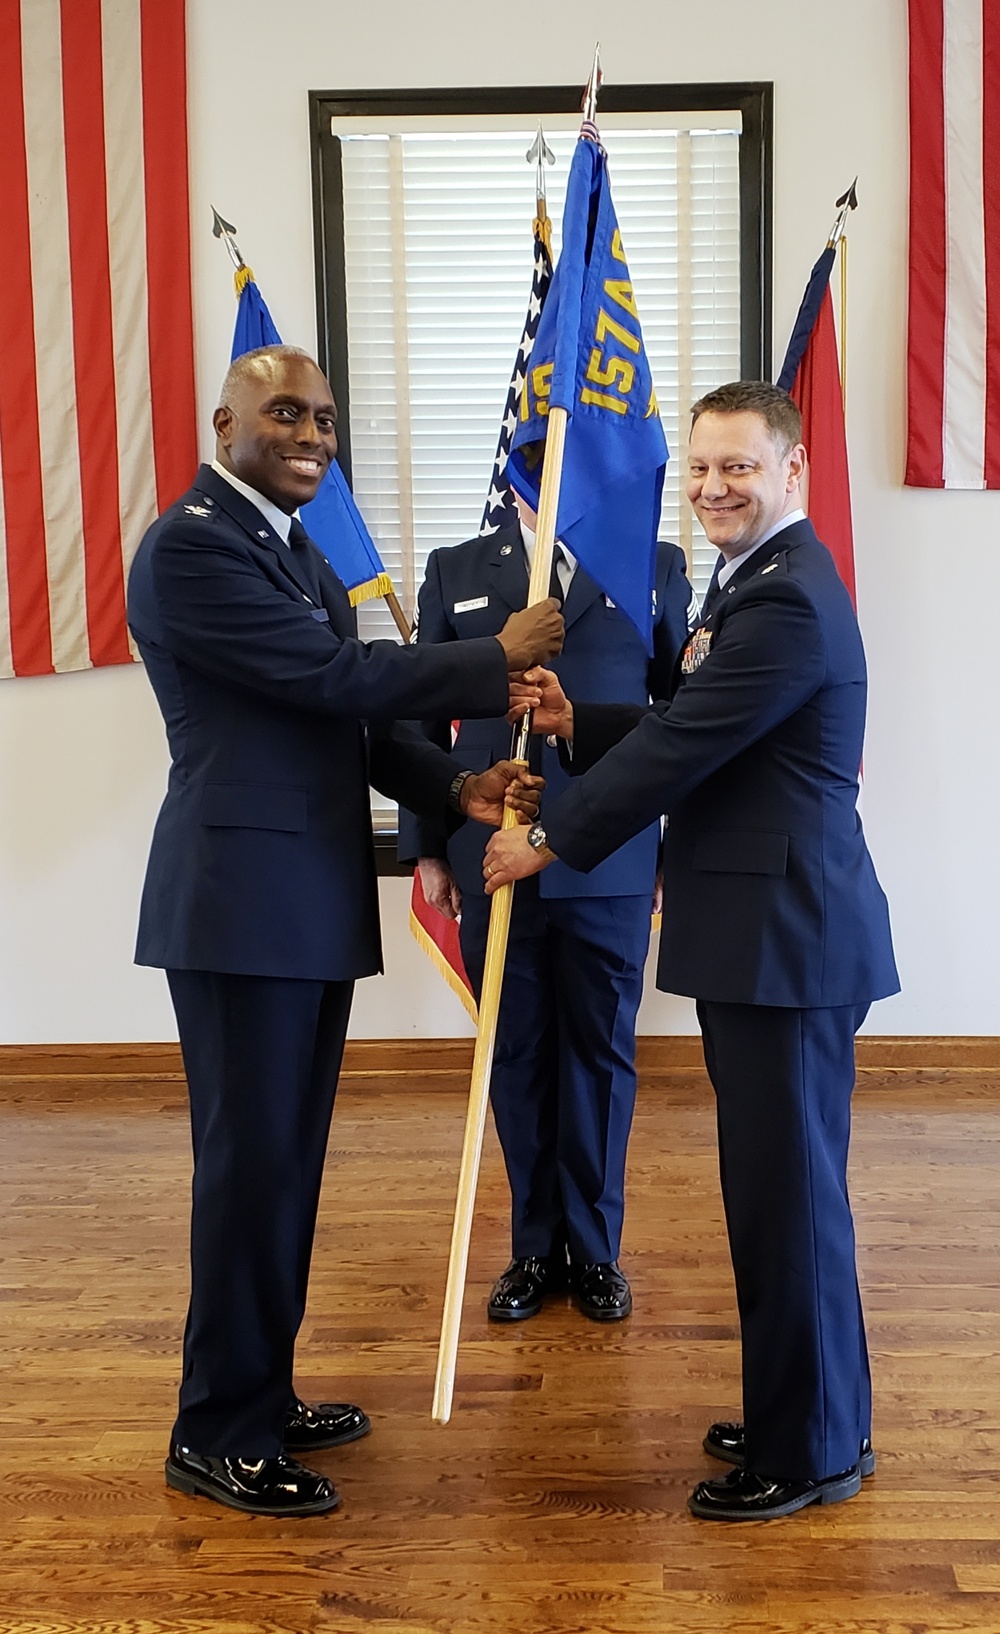 Lt. Col. Al Wirth accepts the 157th Air Intelligence Squadron Guidon